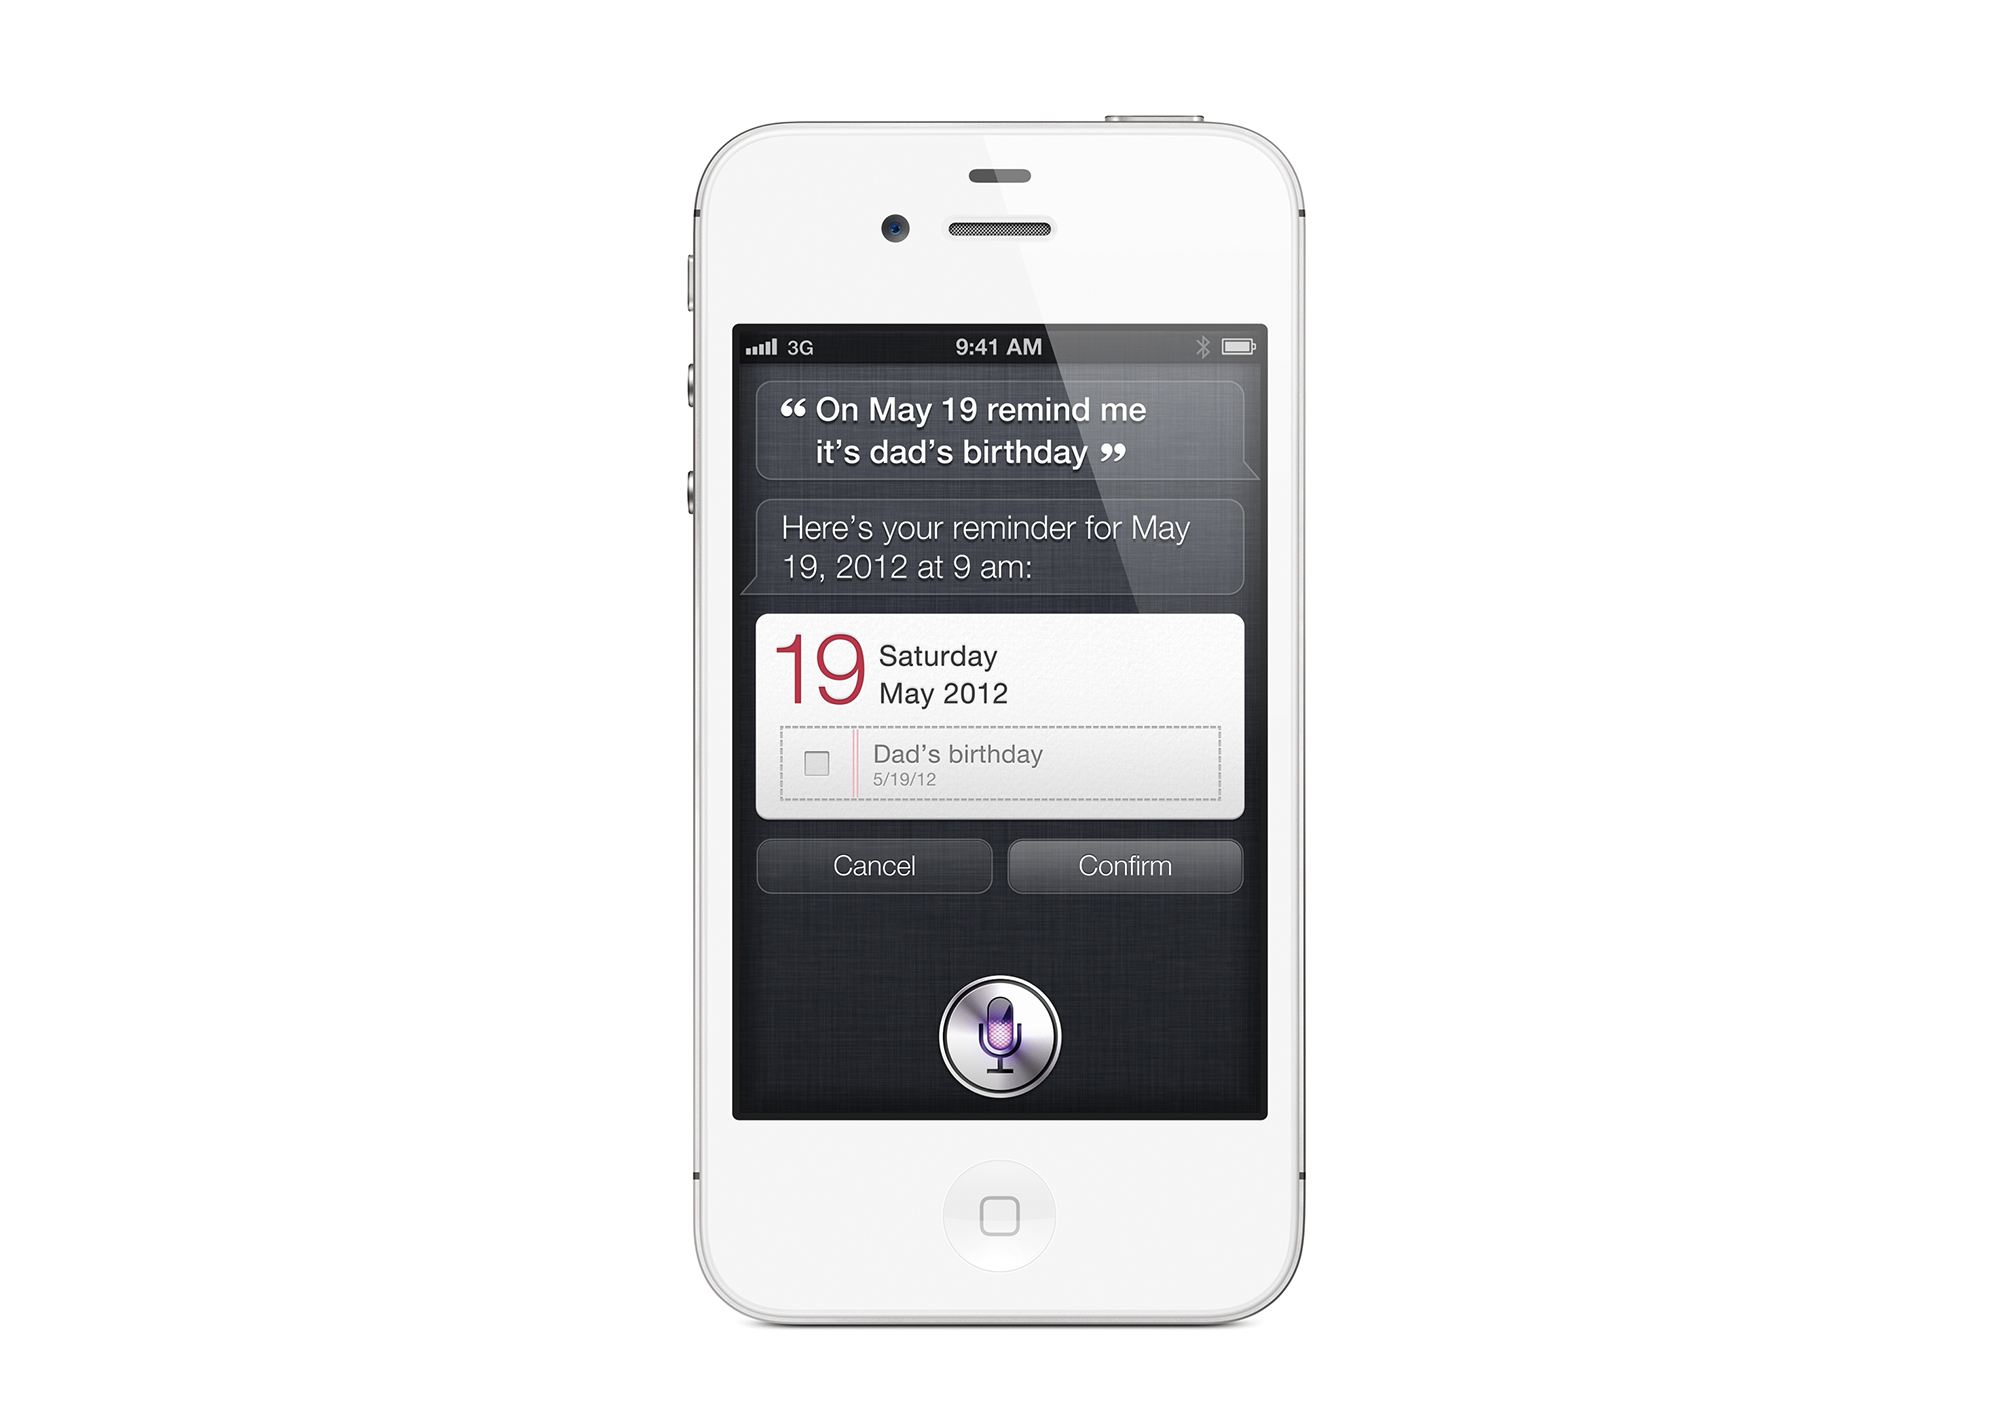 Siri on the iPhone 4S